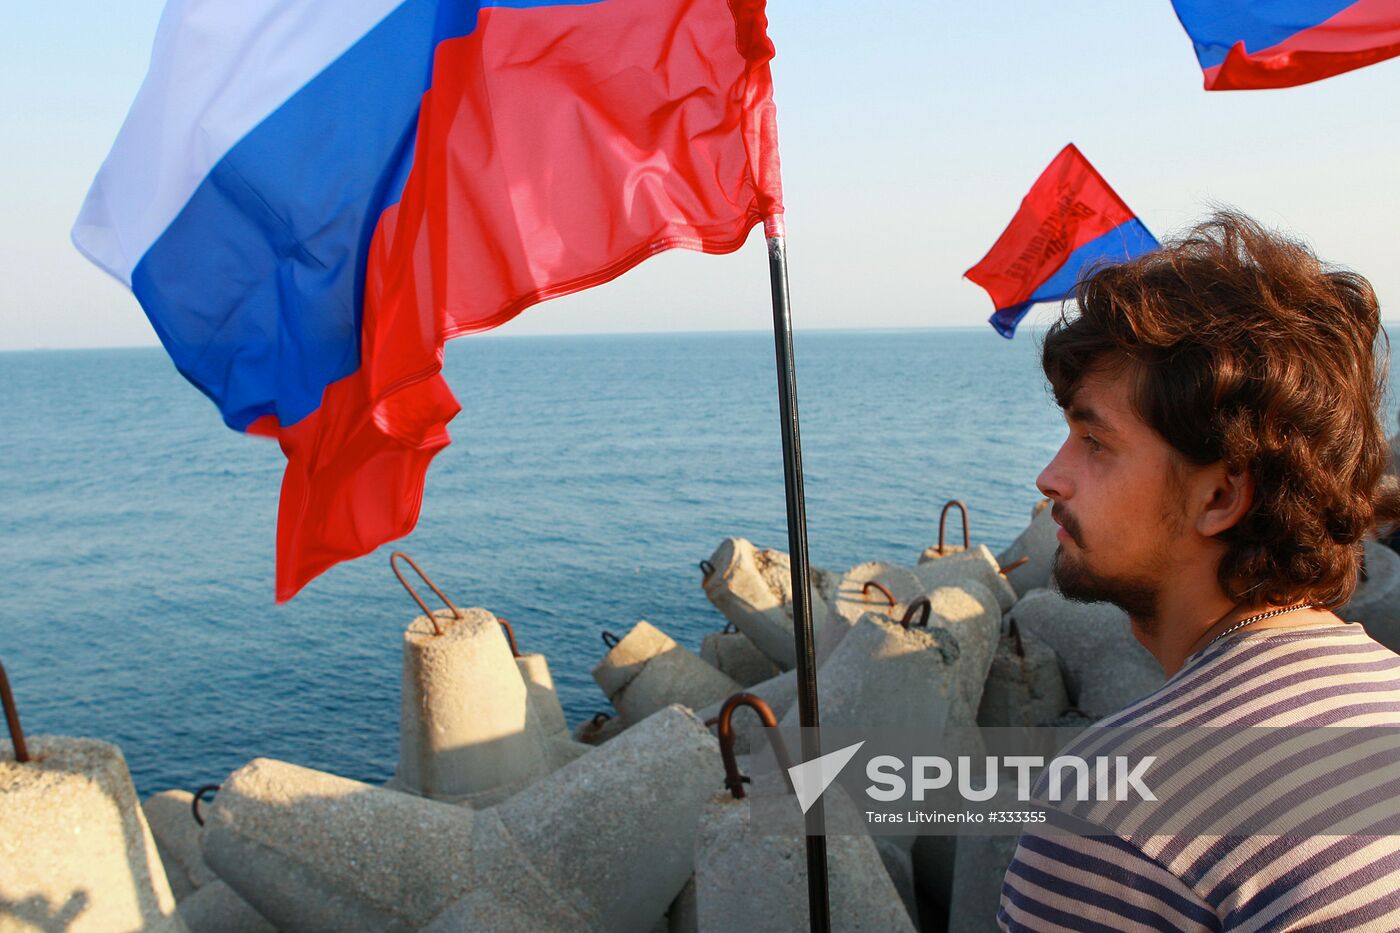 Russian Black Sea Fleet ships returning to their base